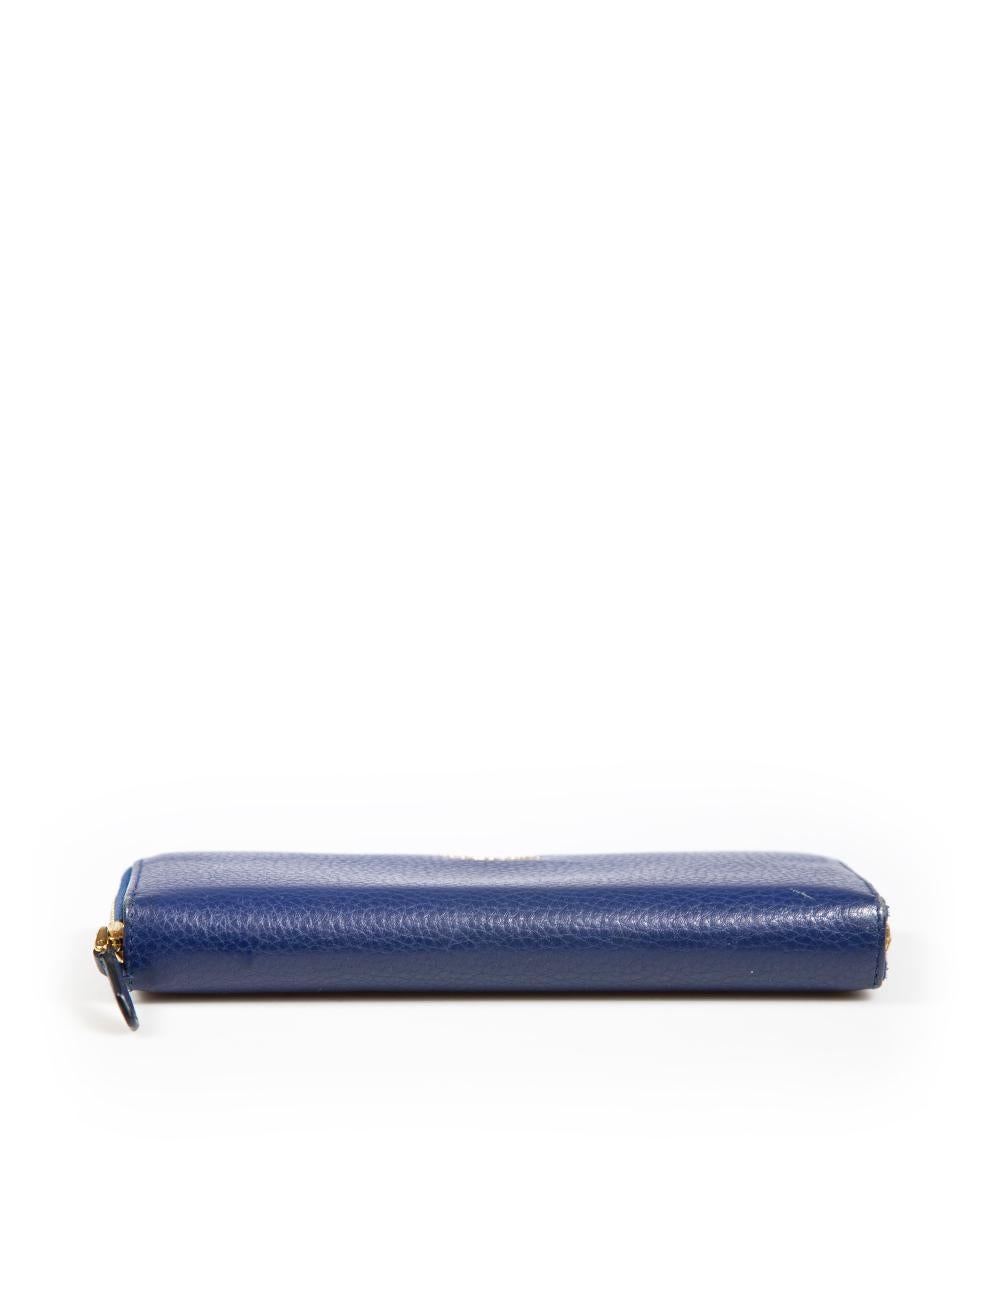 Women's Prada Blue Leather Zip-Around Wallet For Sale